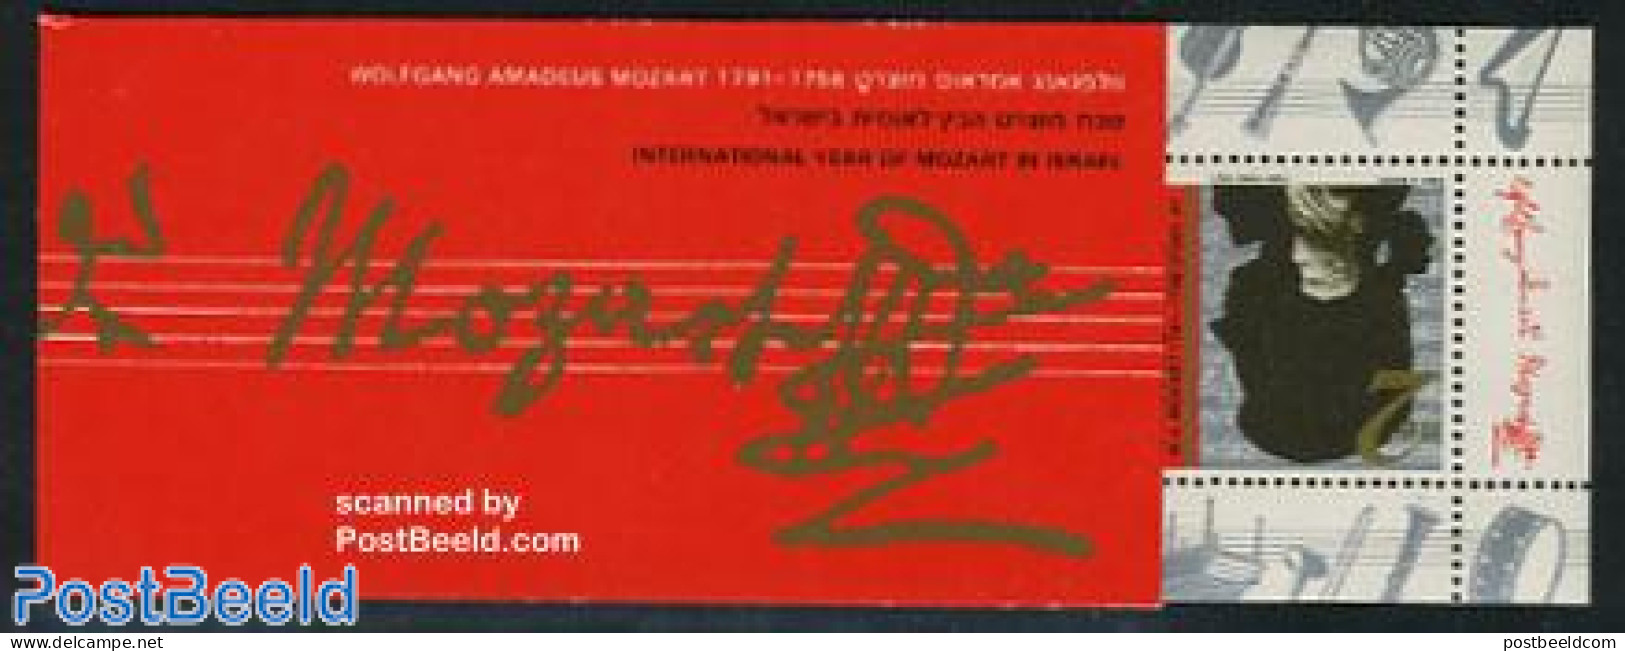 Israel 1991 Mozart Year Booklet, Mint NH, Performance Art - Amadeus Mozart - Music - Stamp Booklets - Ungebraucht (mit Tabs)